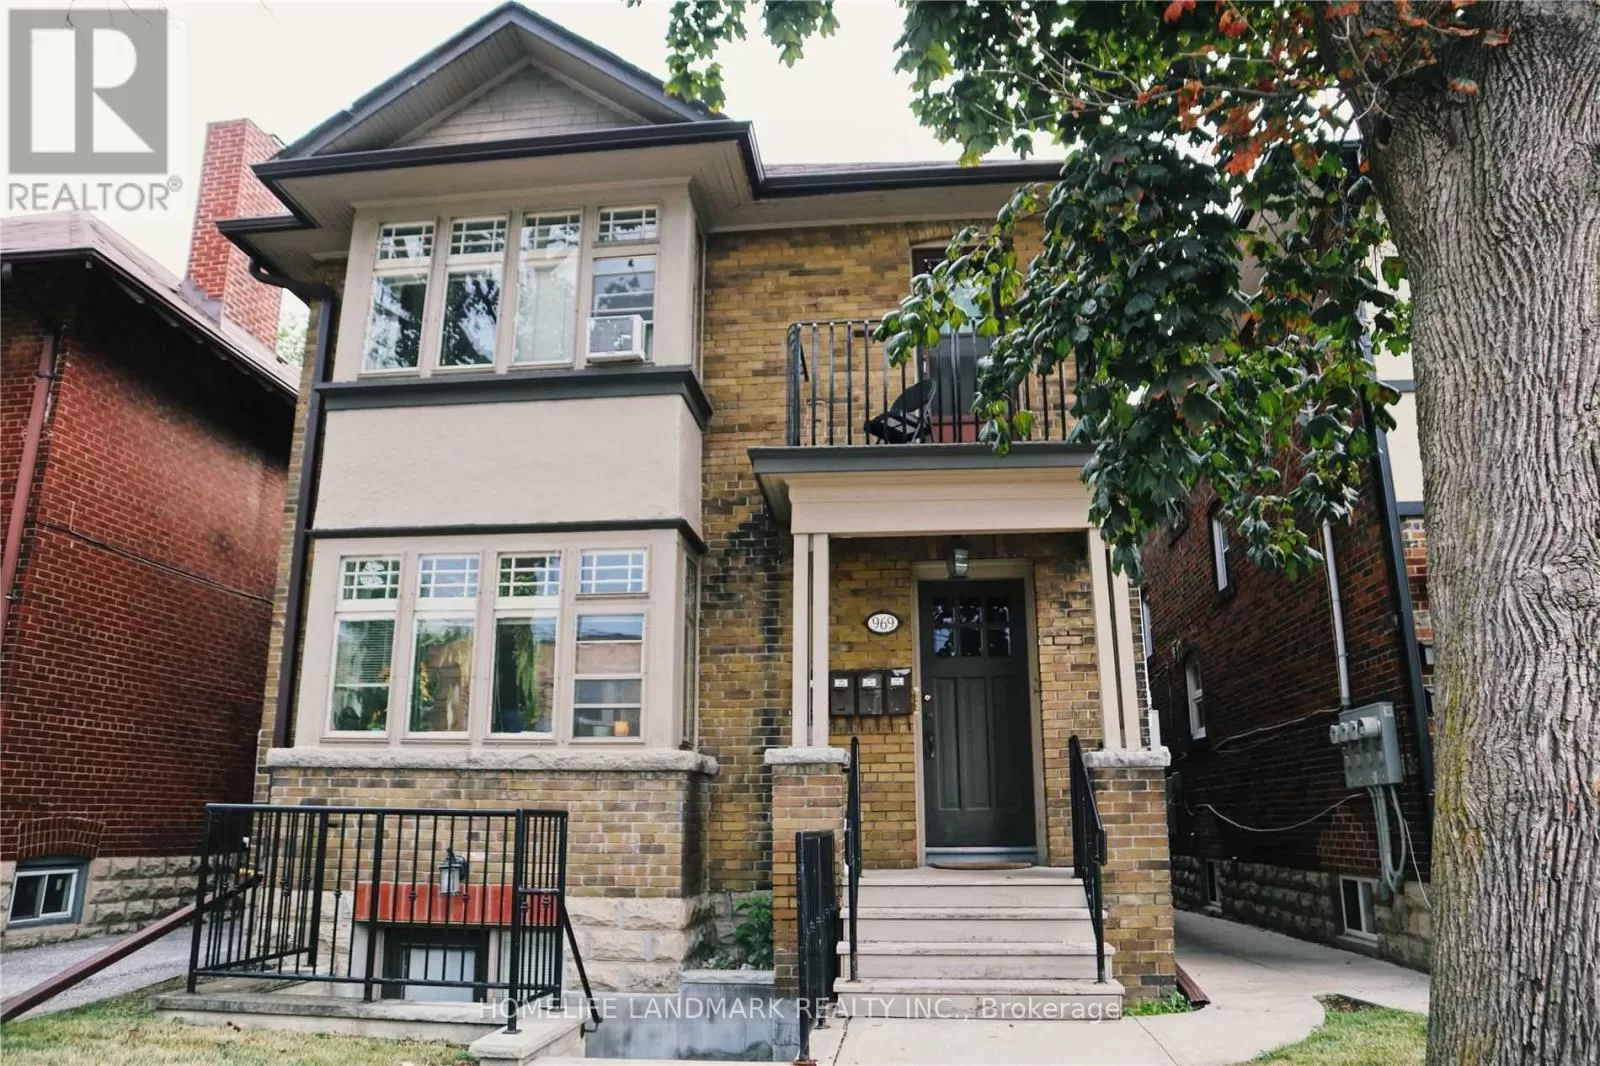 Fourplex for rent: 969 Avenue Rd, Toronto, Ontario M5P 2K9